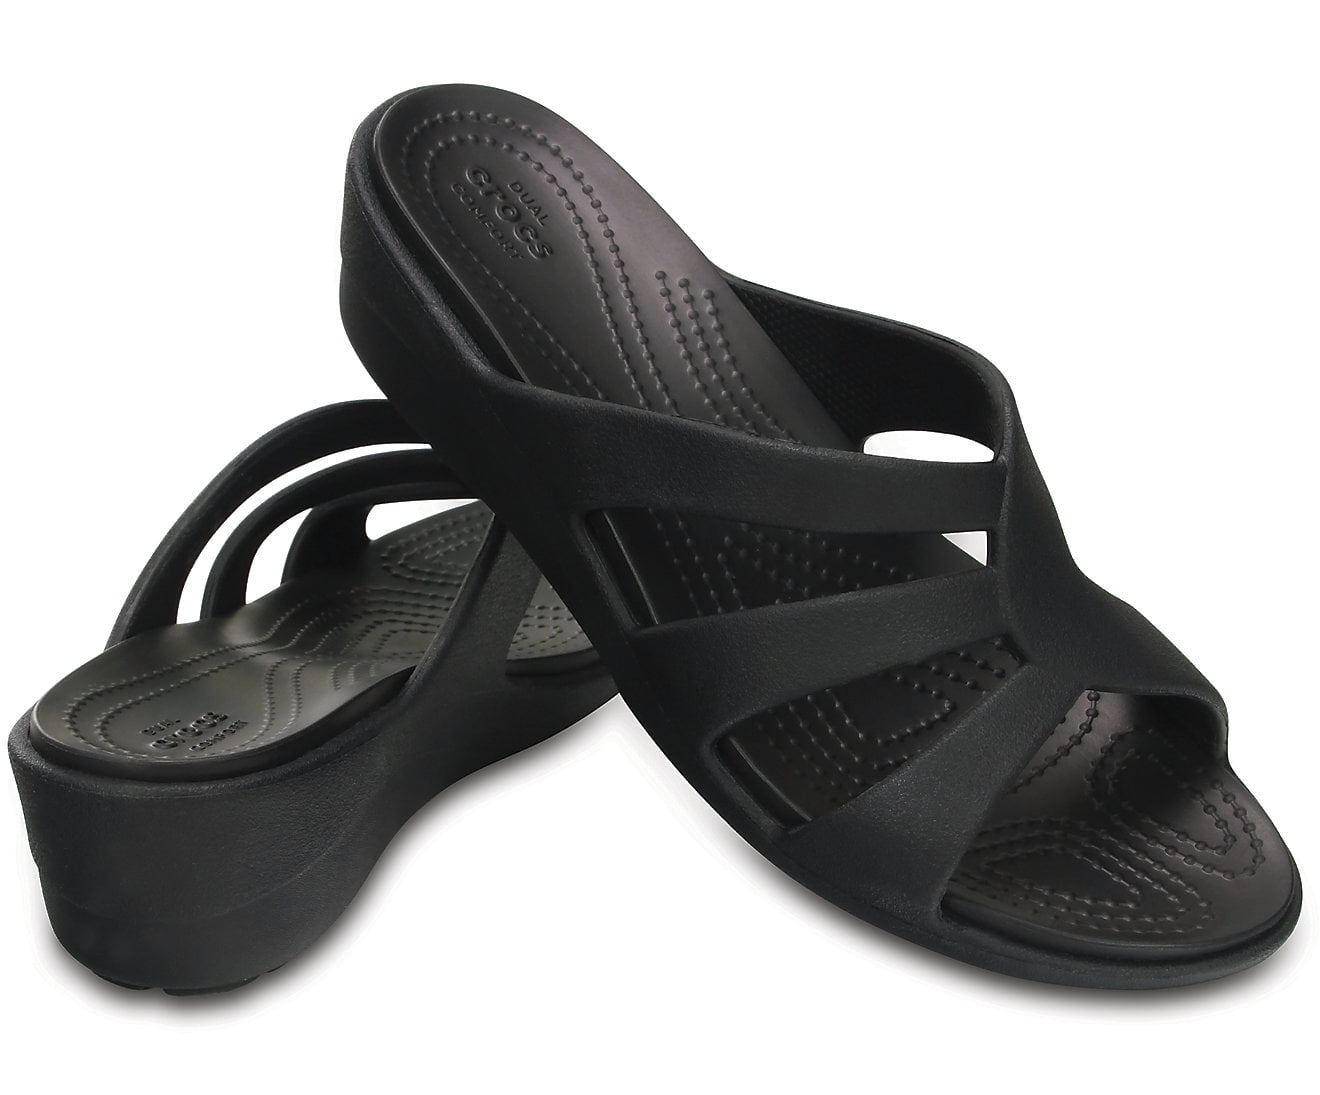 crocs women's sanrah strappy wedge sandal